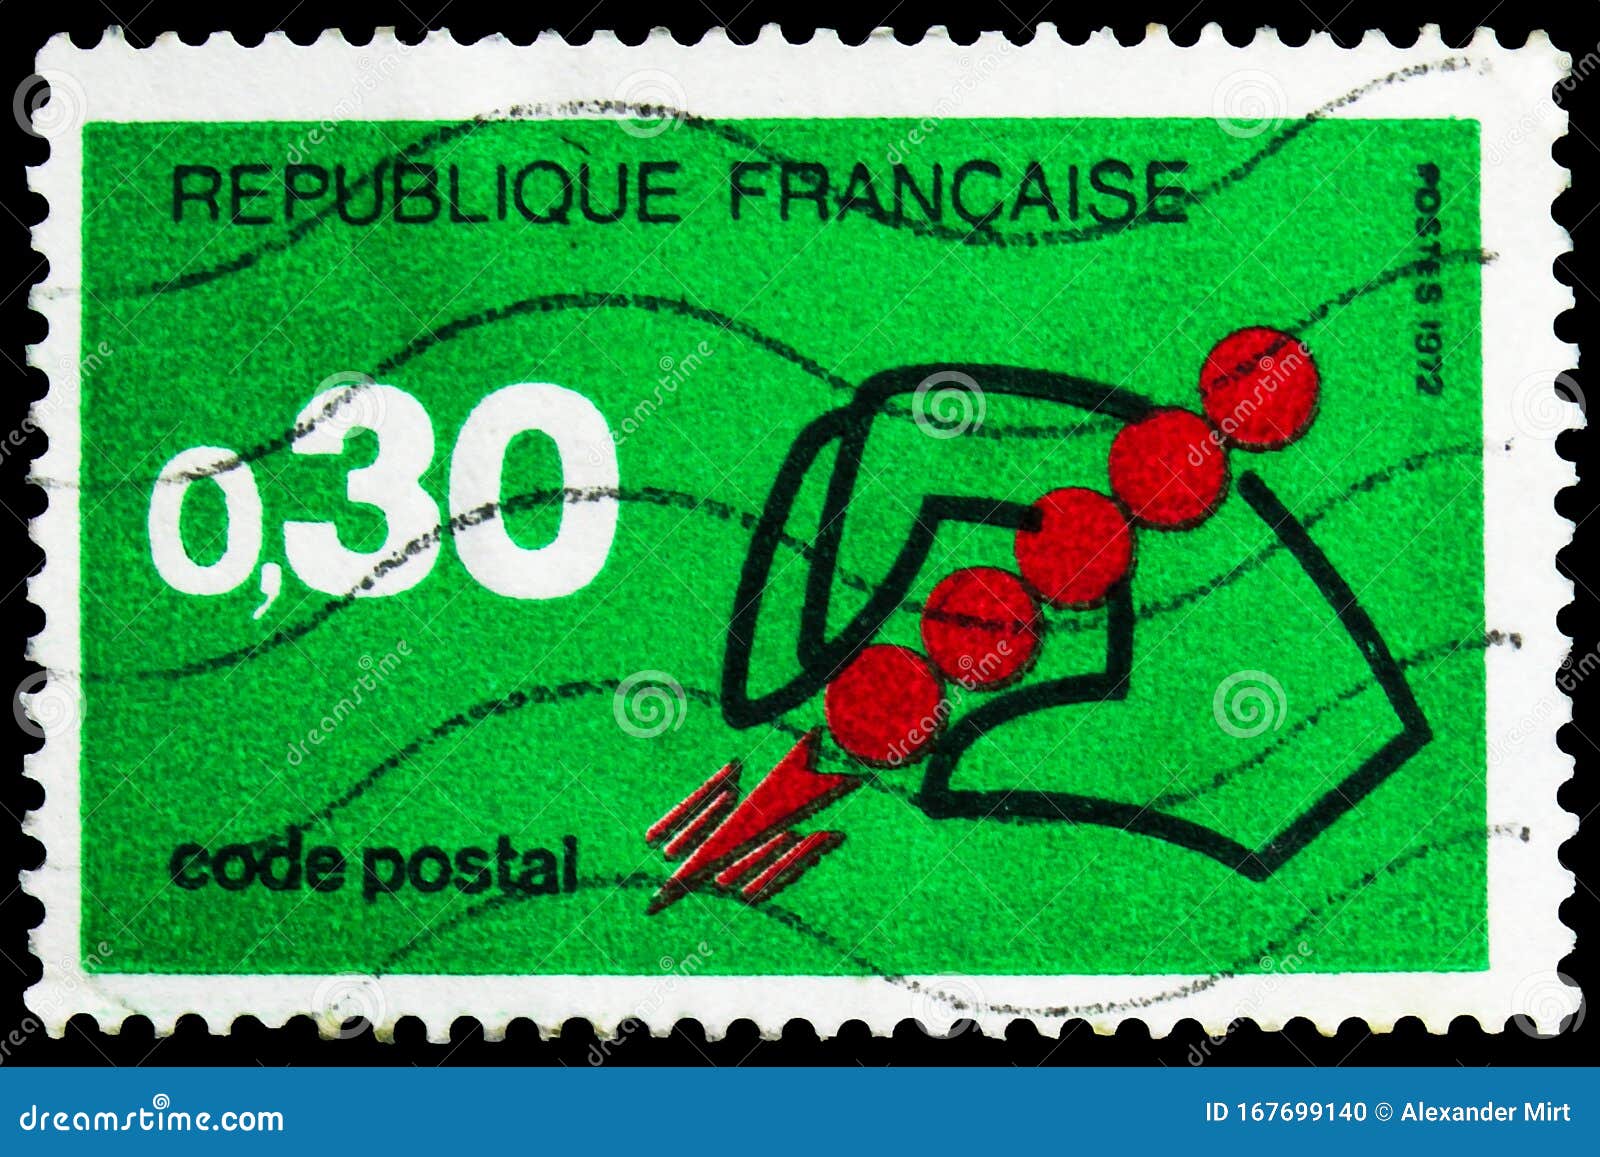 Postal code